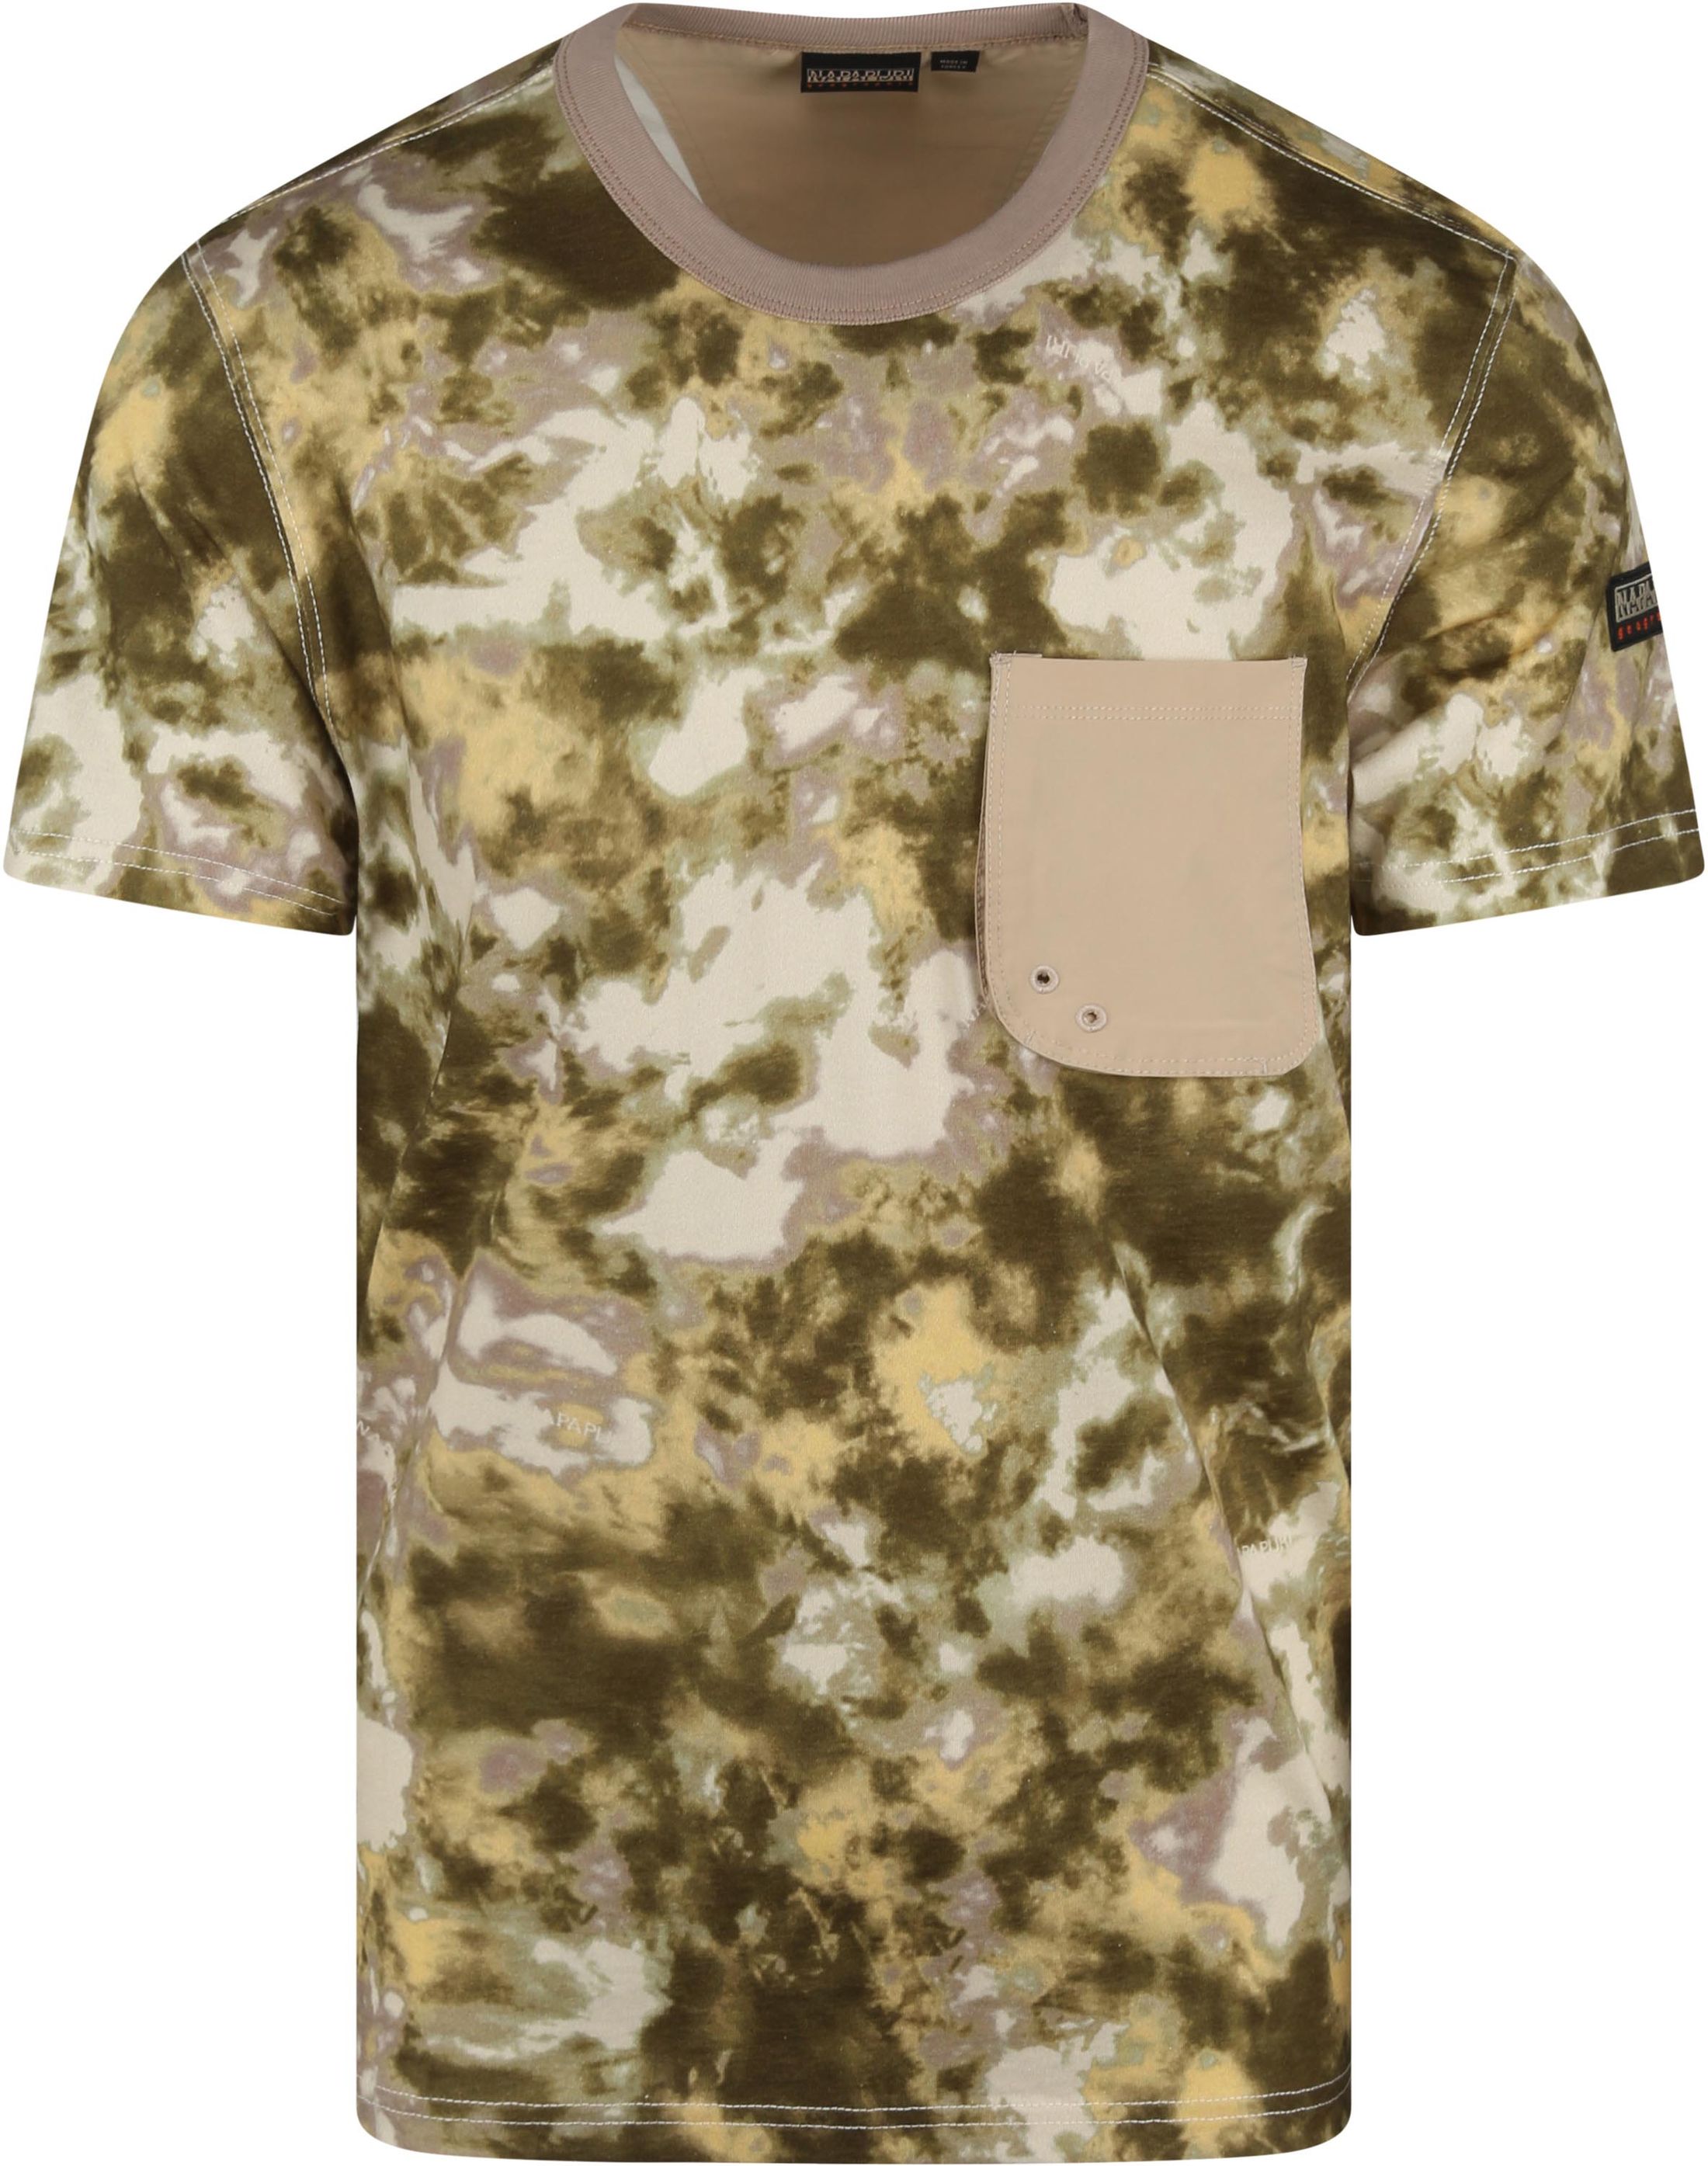 Napapijri Camouflage T-Shirt Green Khaki size L